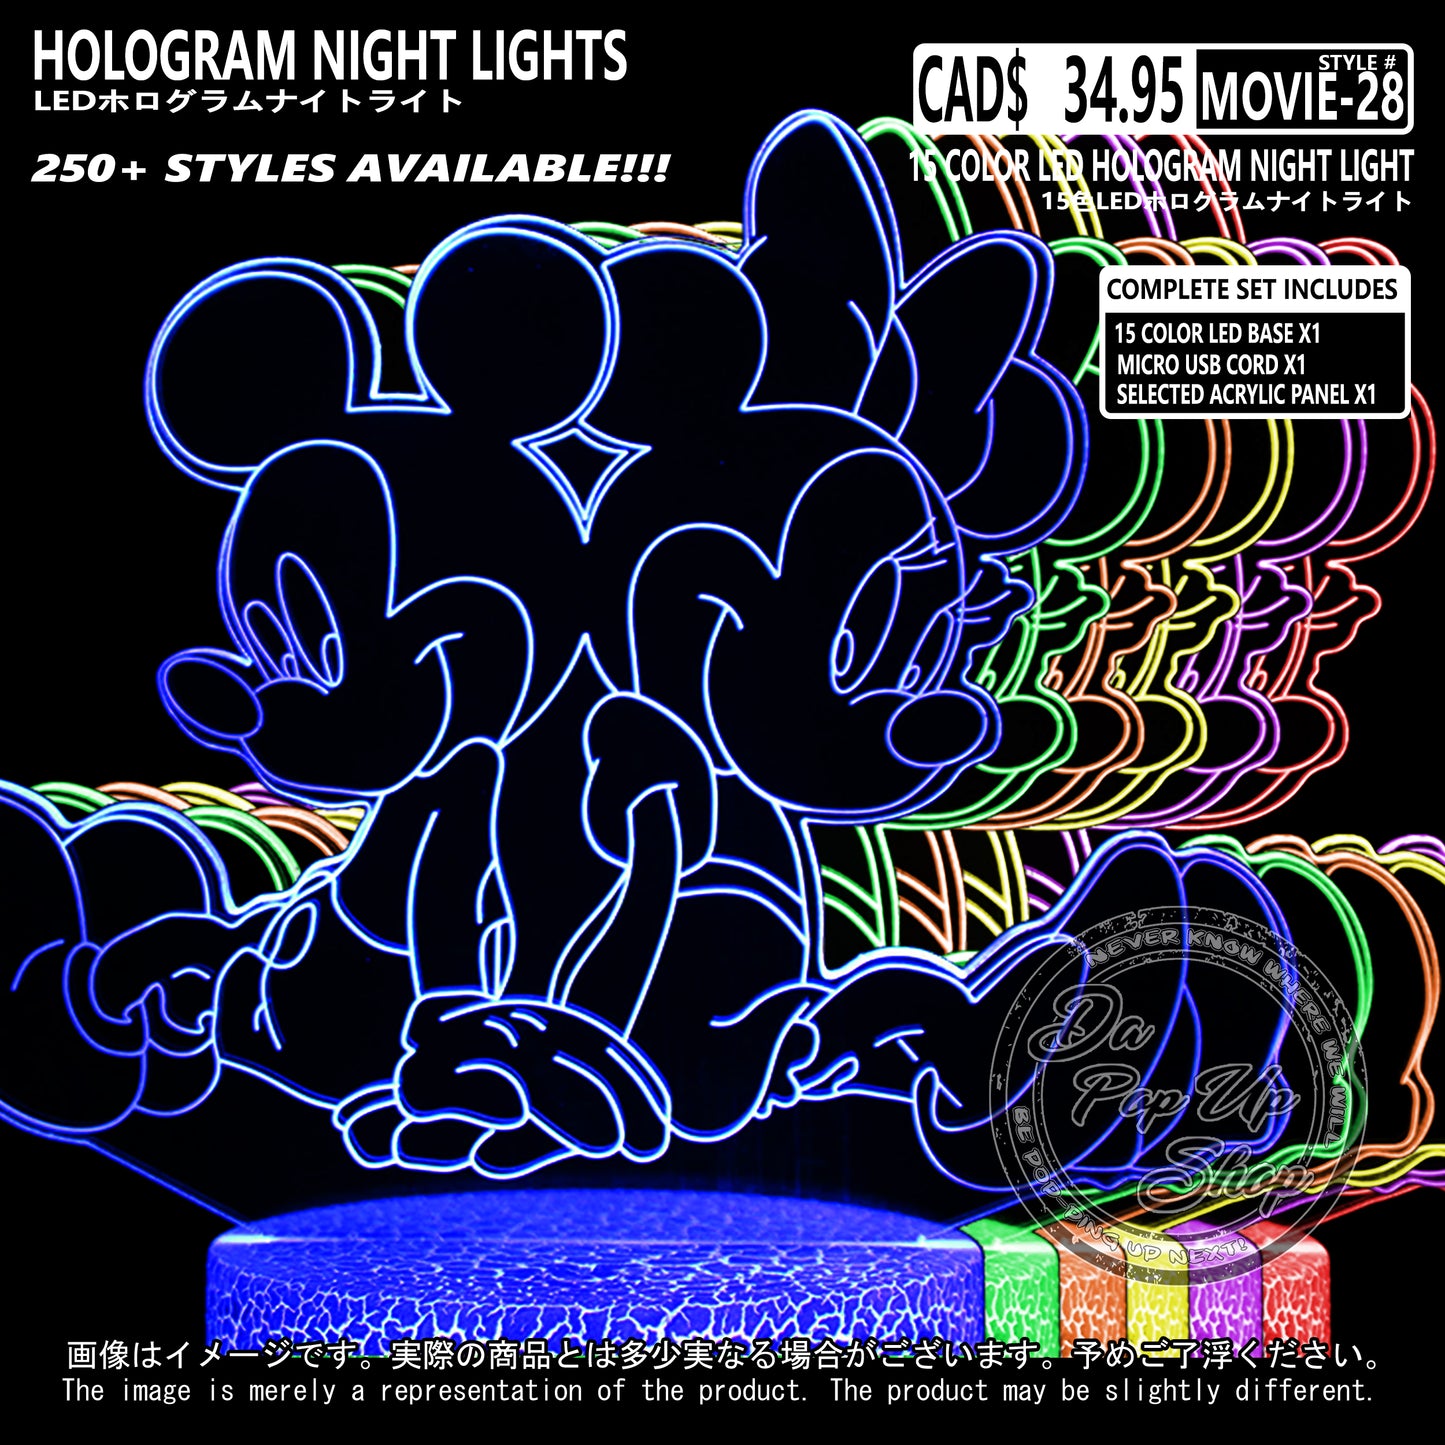 (MOVIE-28) MICKEY MOUSE Disney Hologram LED Night Light